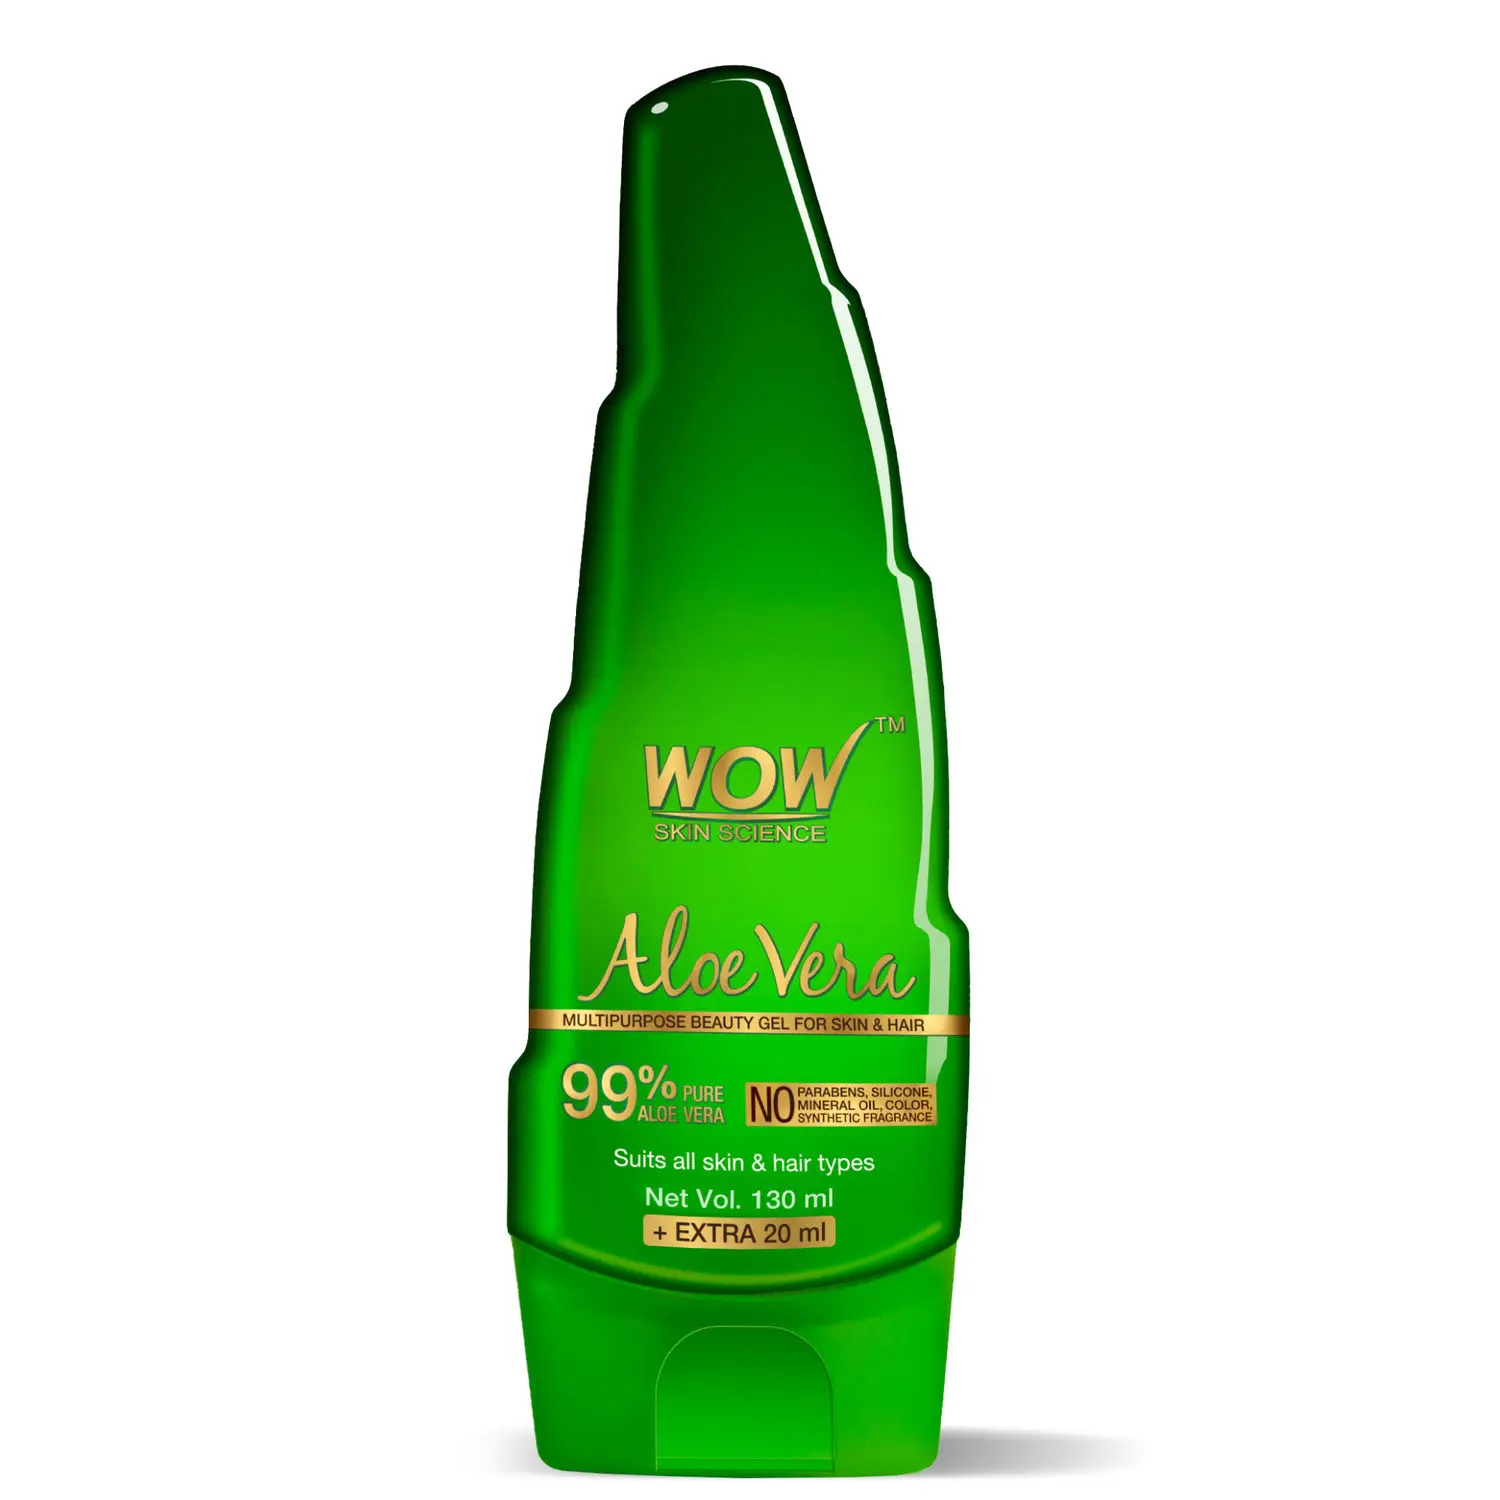 WOW Skin Science Aloe Vera Multipurpose Beauty Gel For Skin & Hair (150 ml)